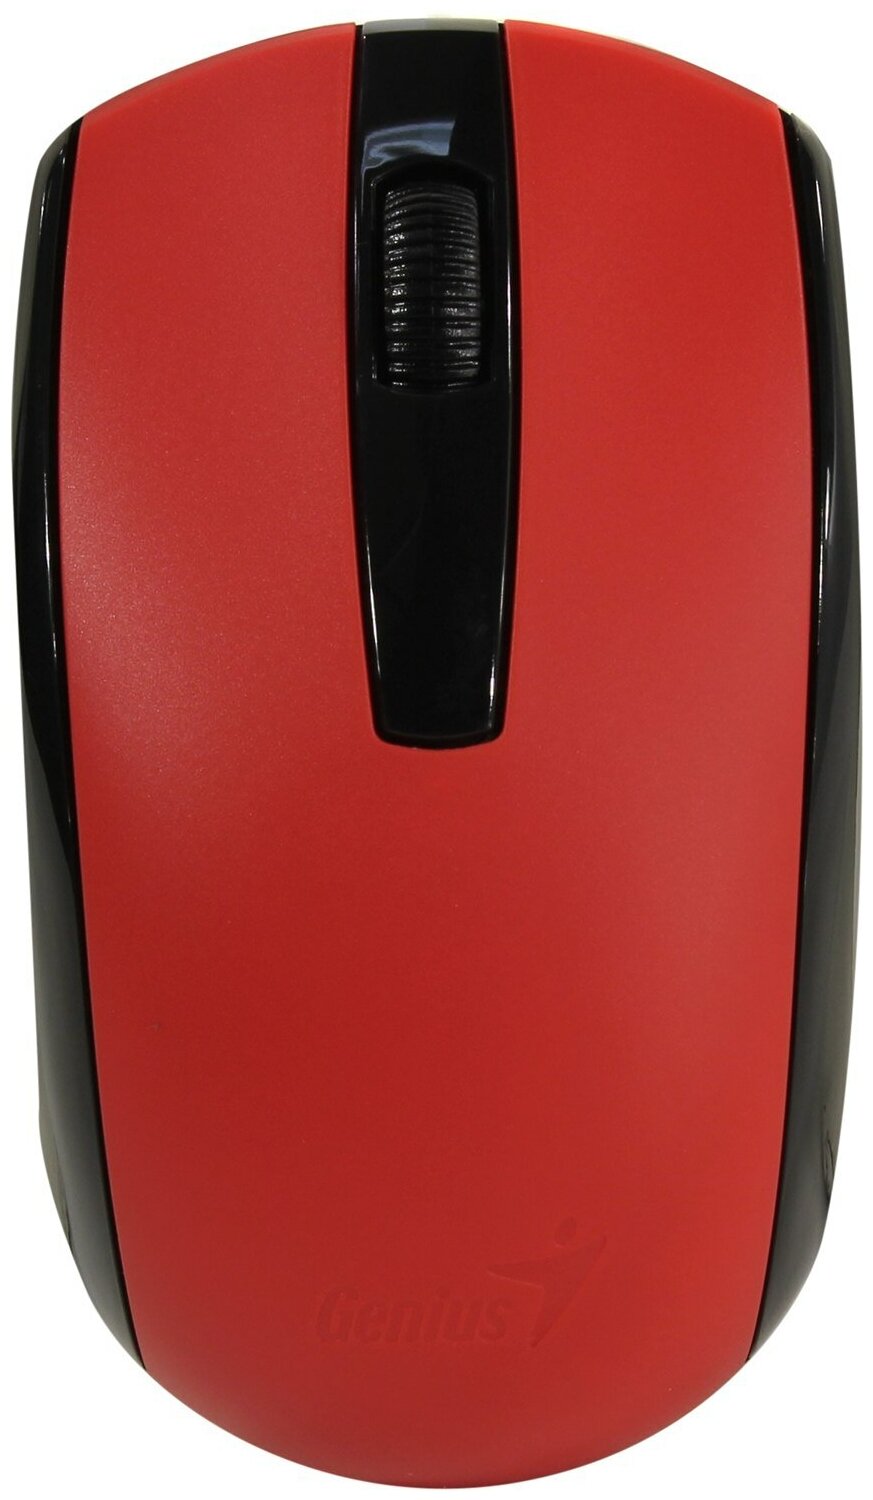 Мышь беспроводная Genius ECO-8100 красная (Red), 2.4GHz, BlueEye 800-1600 dpi, аккумулятор NiMH